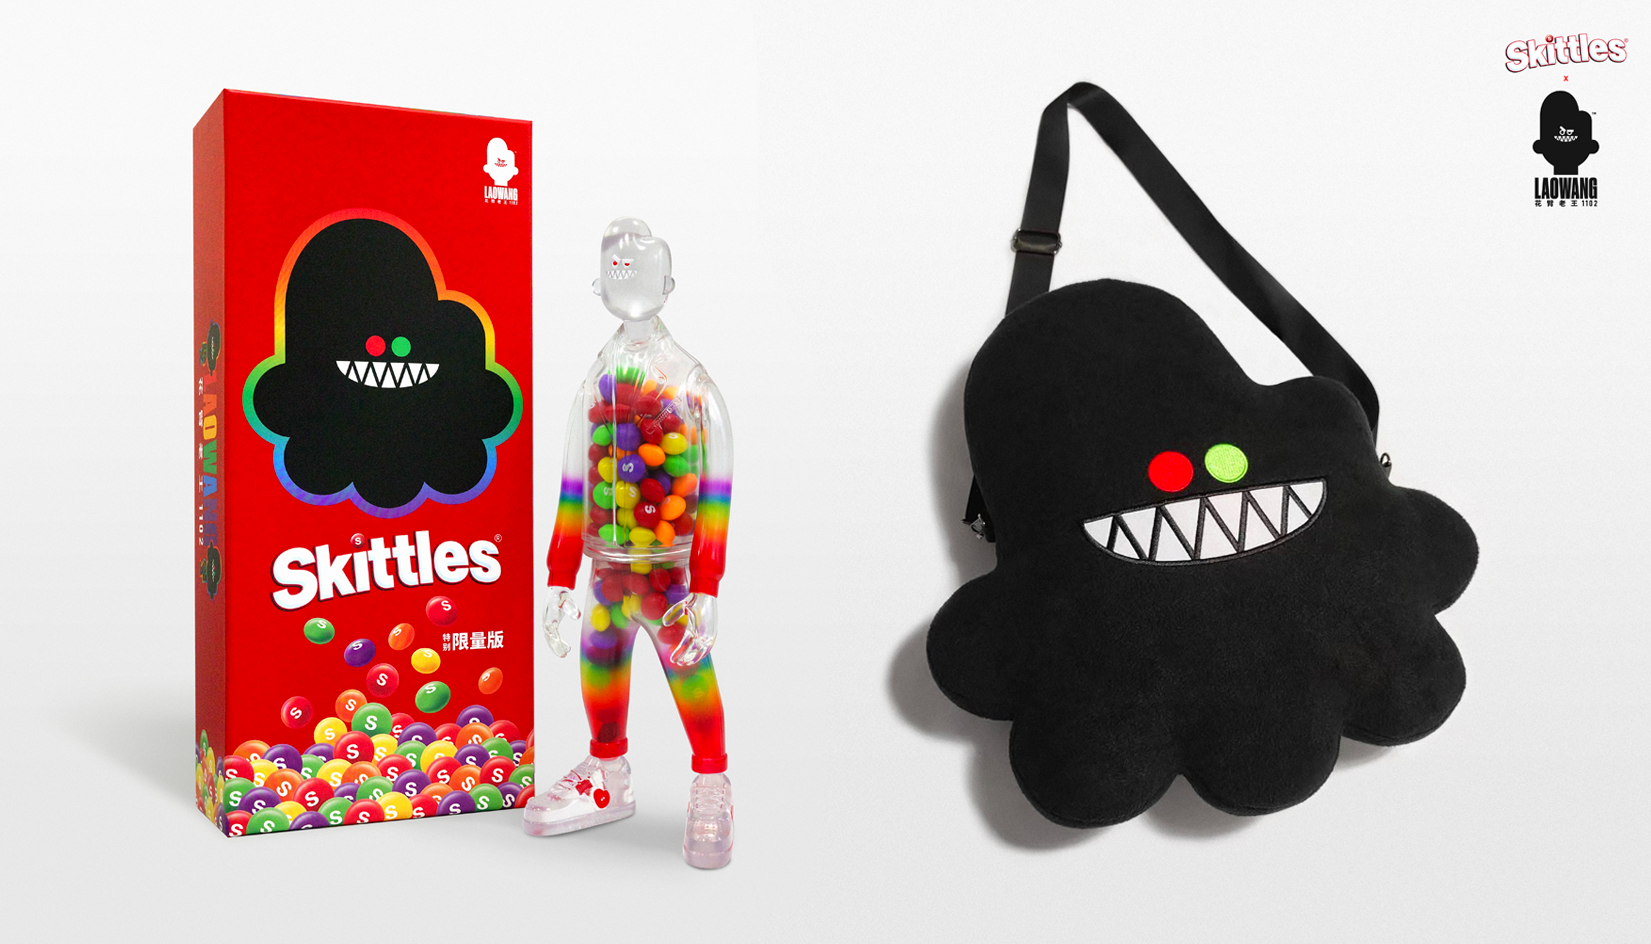 Skittles China, LAOWANG create designer toy range